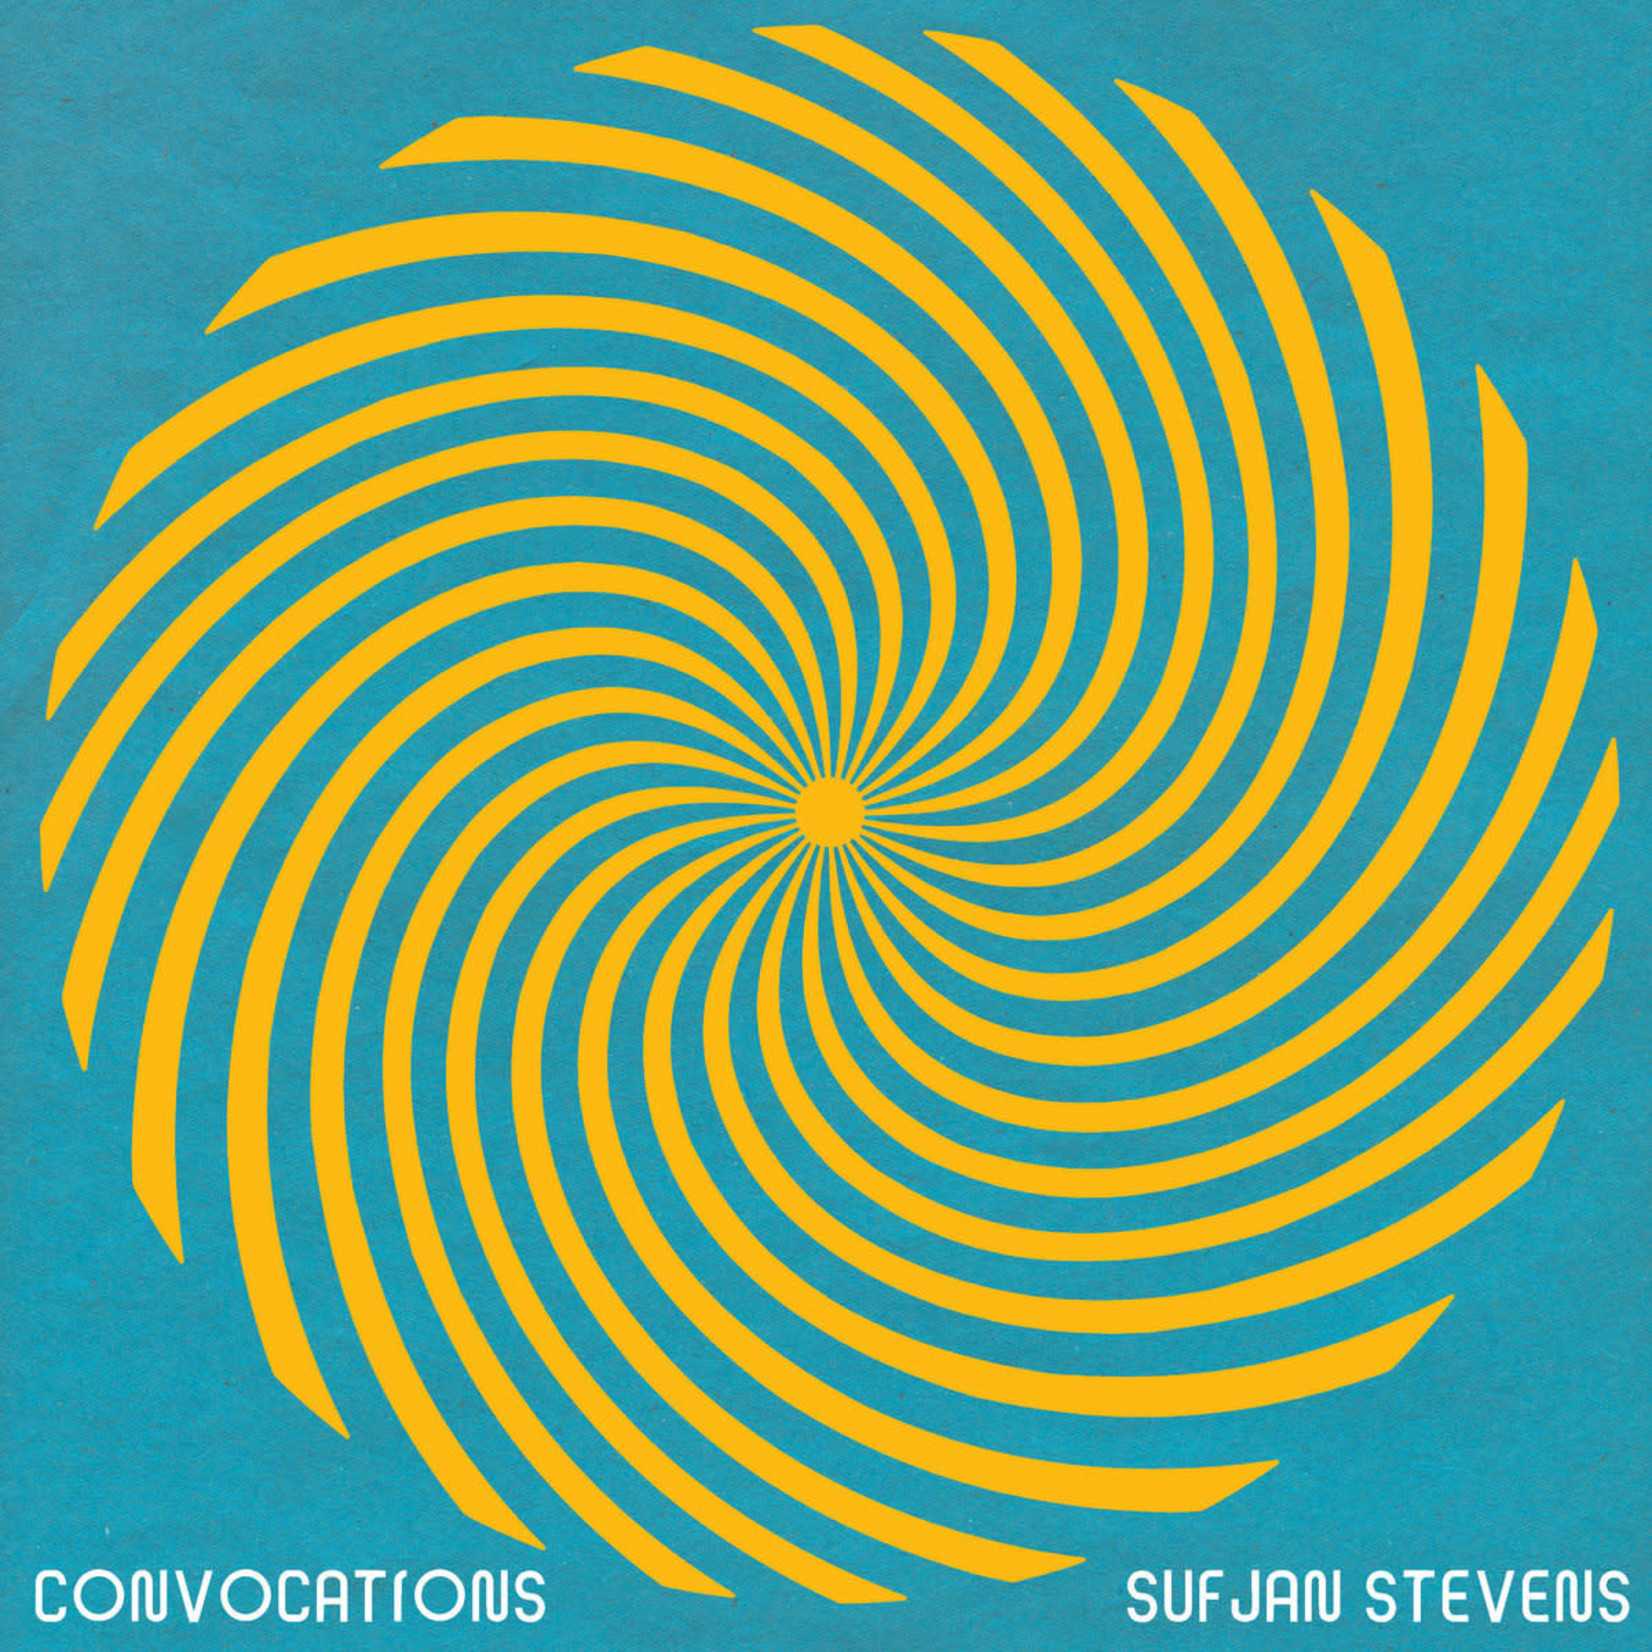 [New] Sufjan Stevens - Convocations (5LP, colour vinyl)